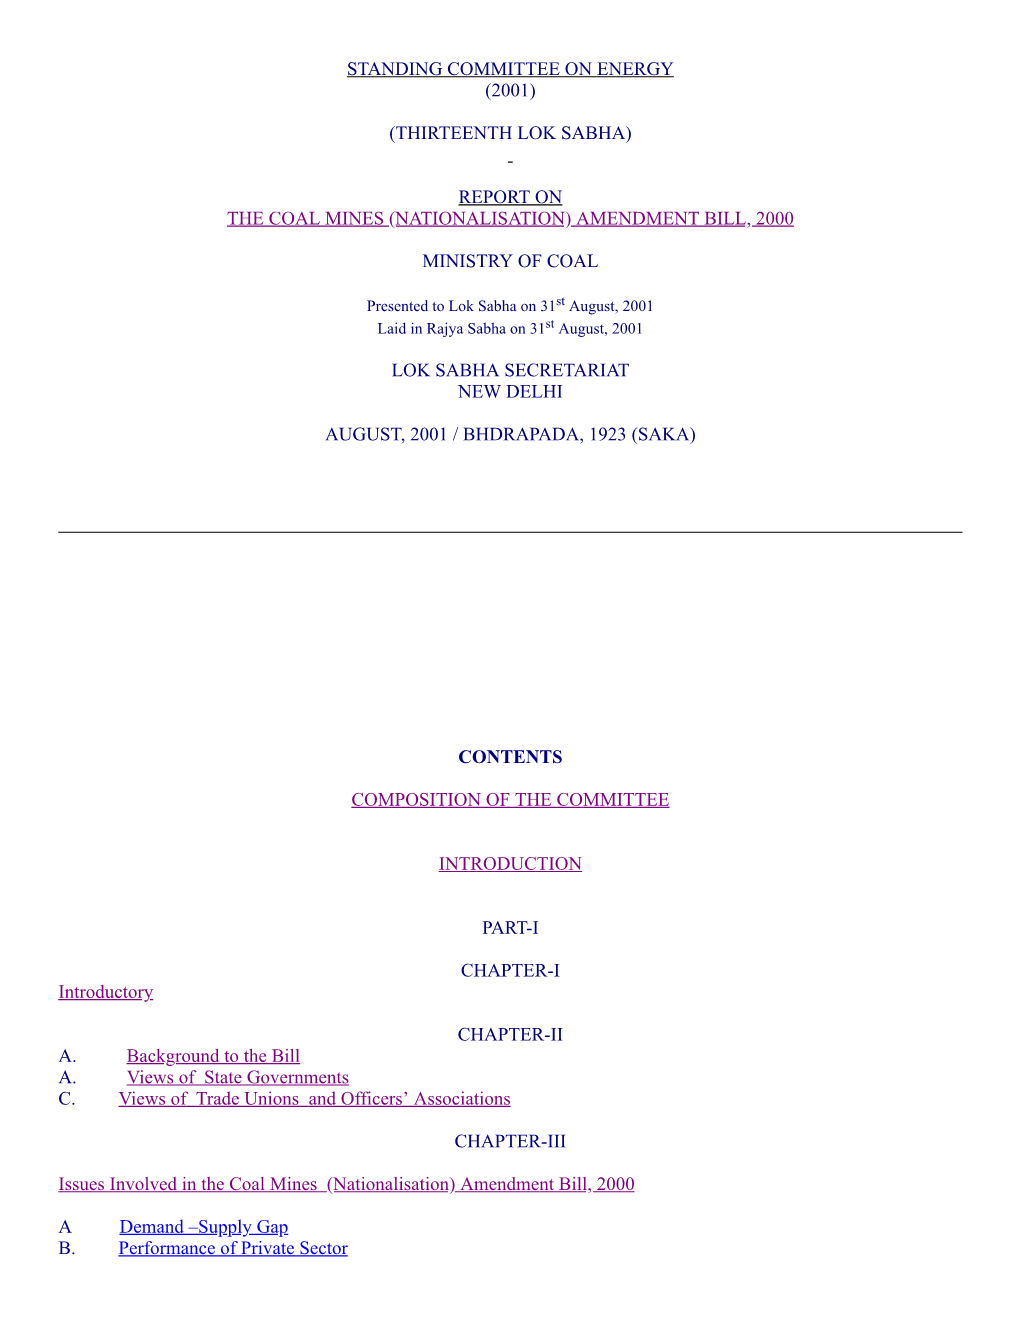 Report on the Coal Mines (Nationalisation) Amendment Bill, 2000